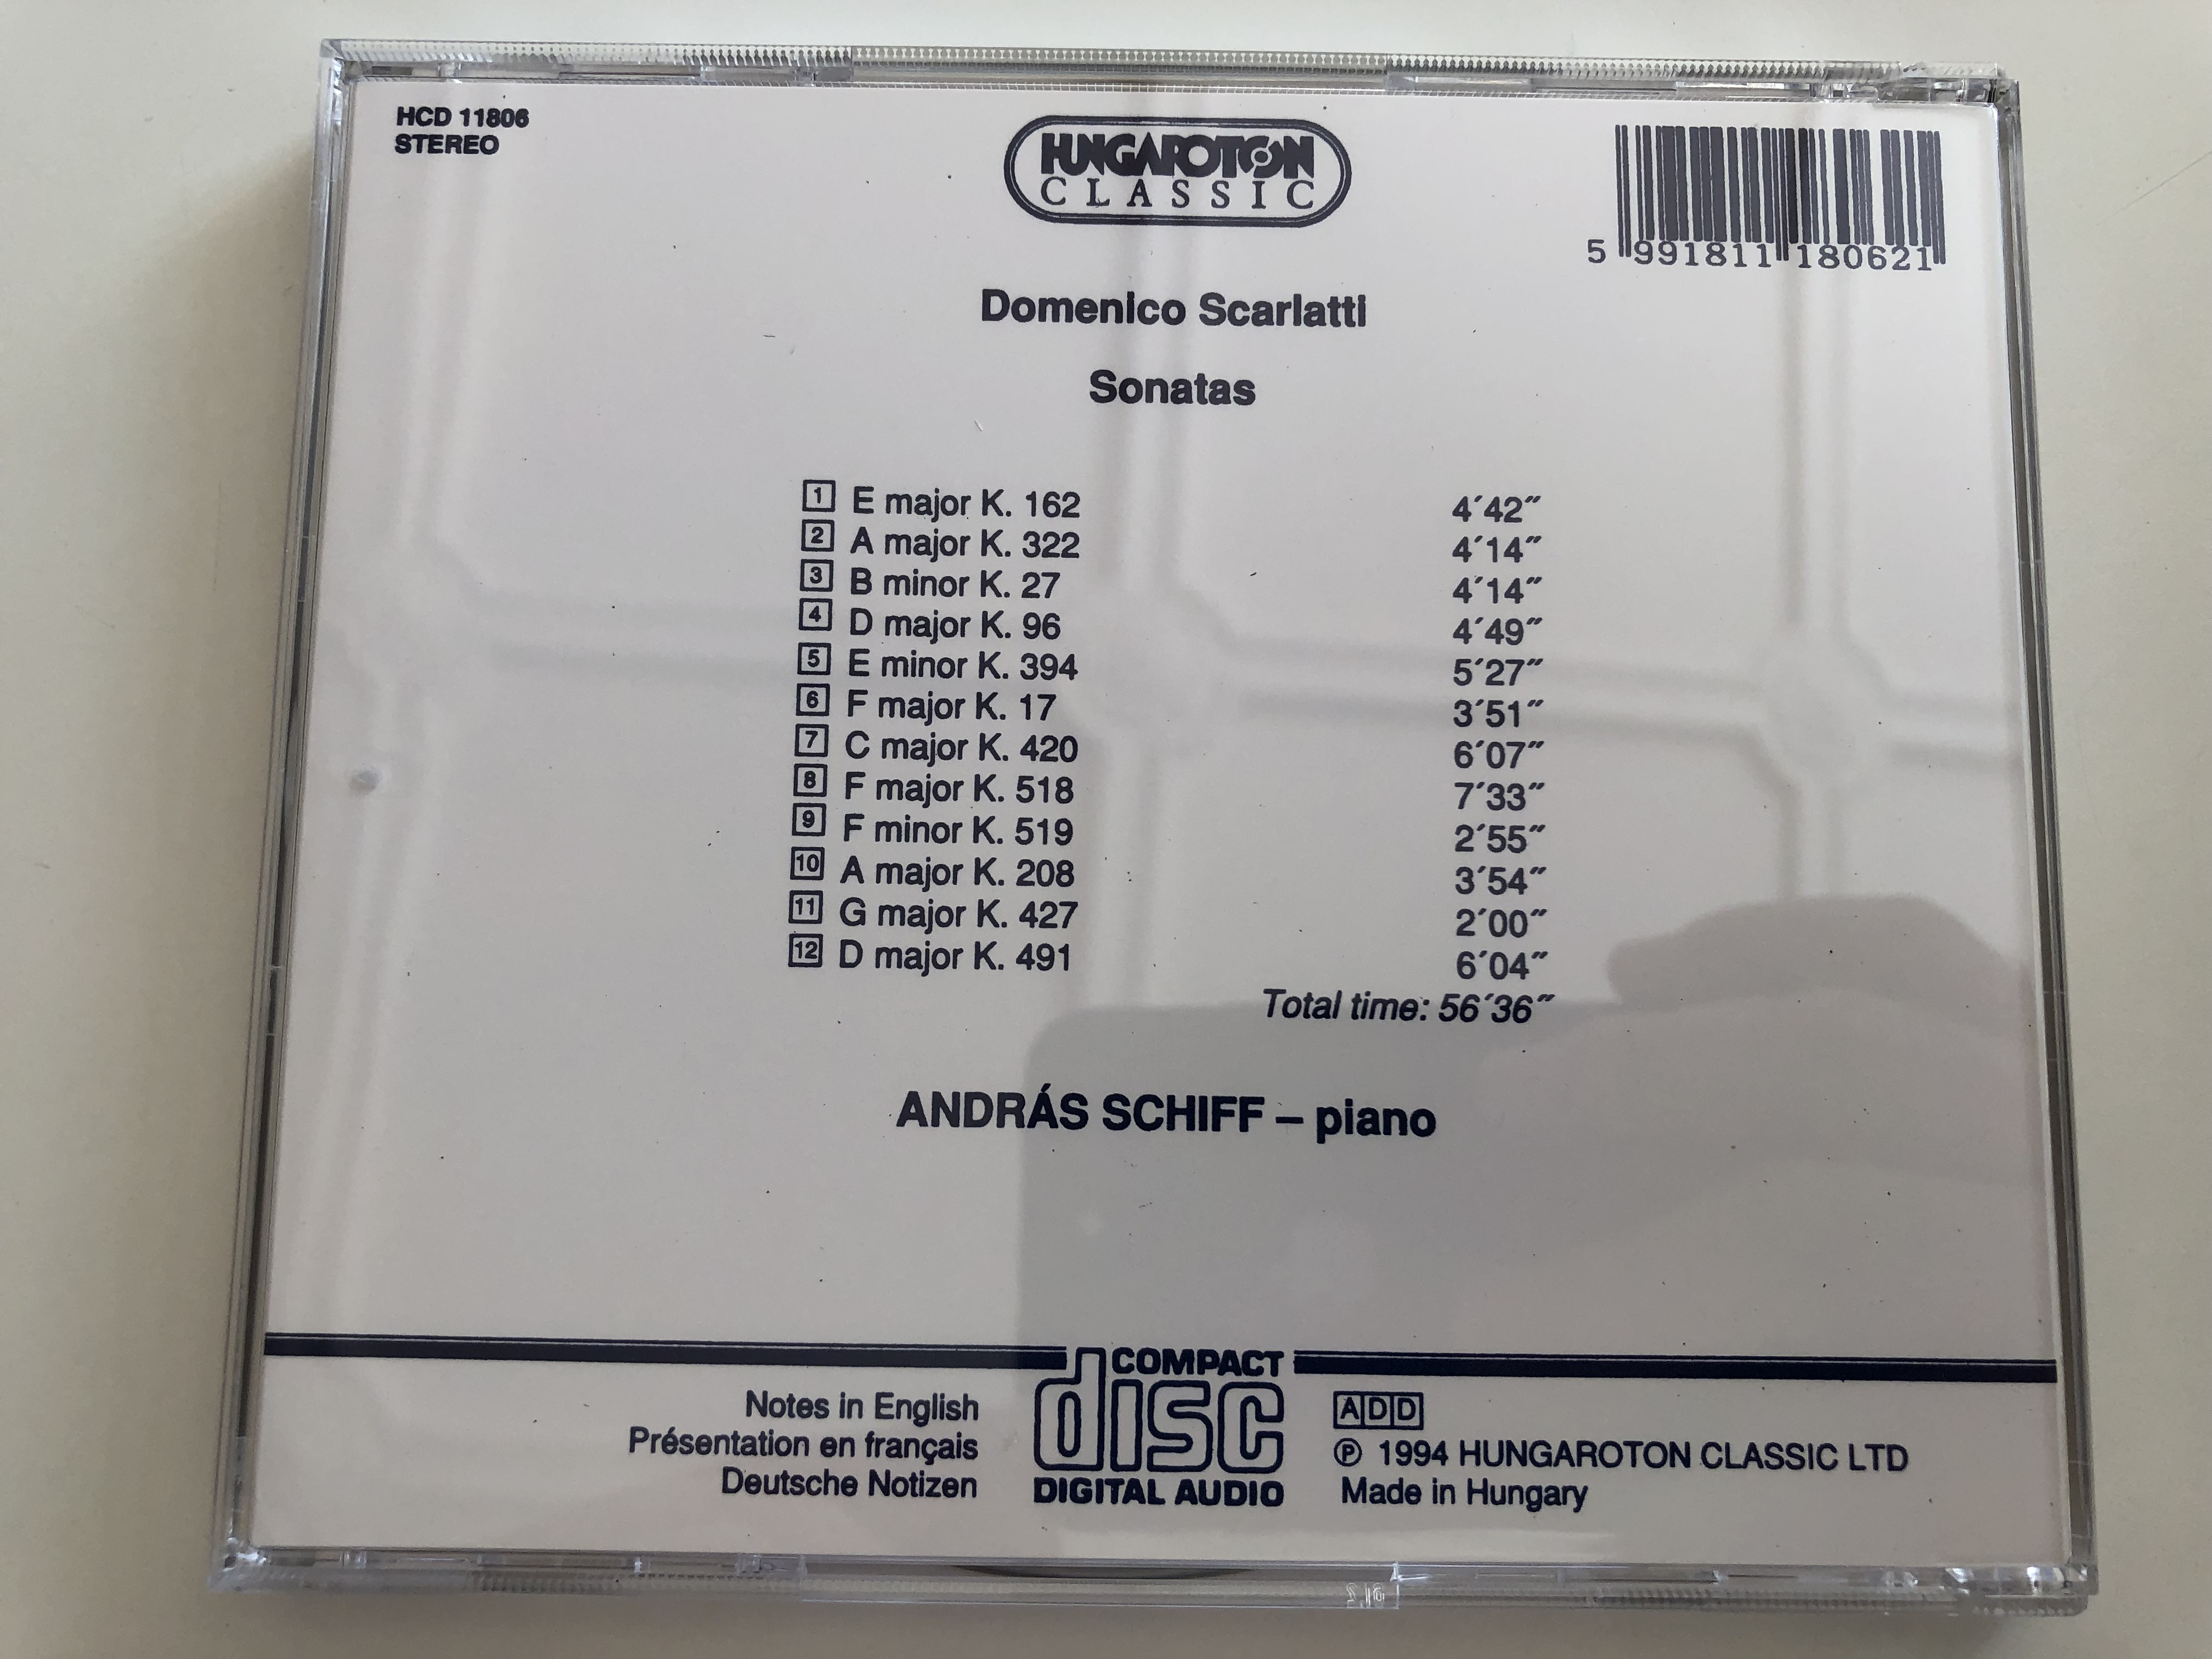 domenico-scarlatti-12-sonatas-andr-s-schiff-piano-hungaroton-classic-audio-cd-1994-hcd11806-7-.jpg